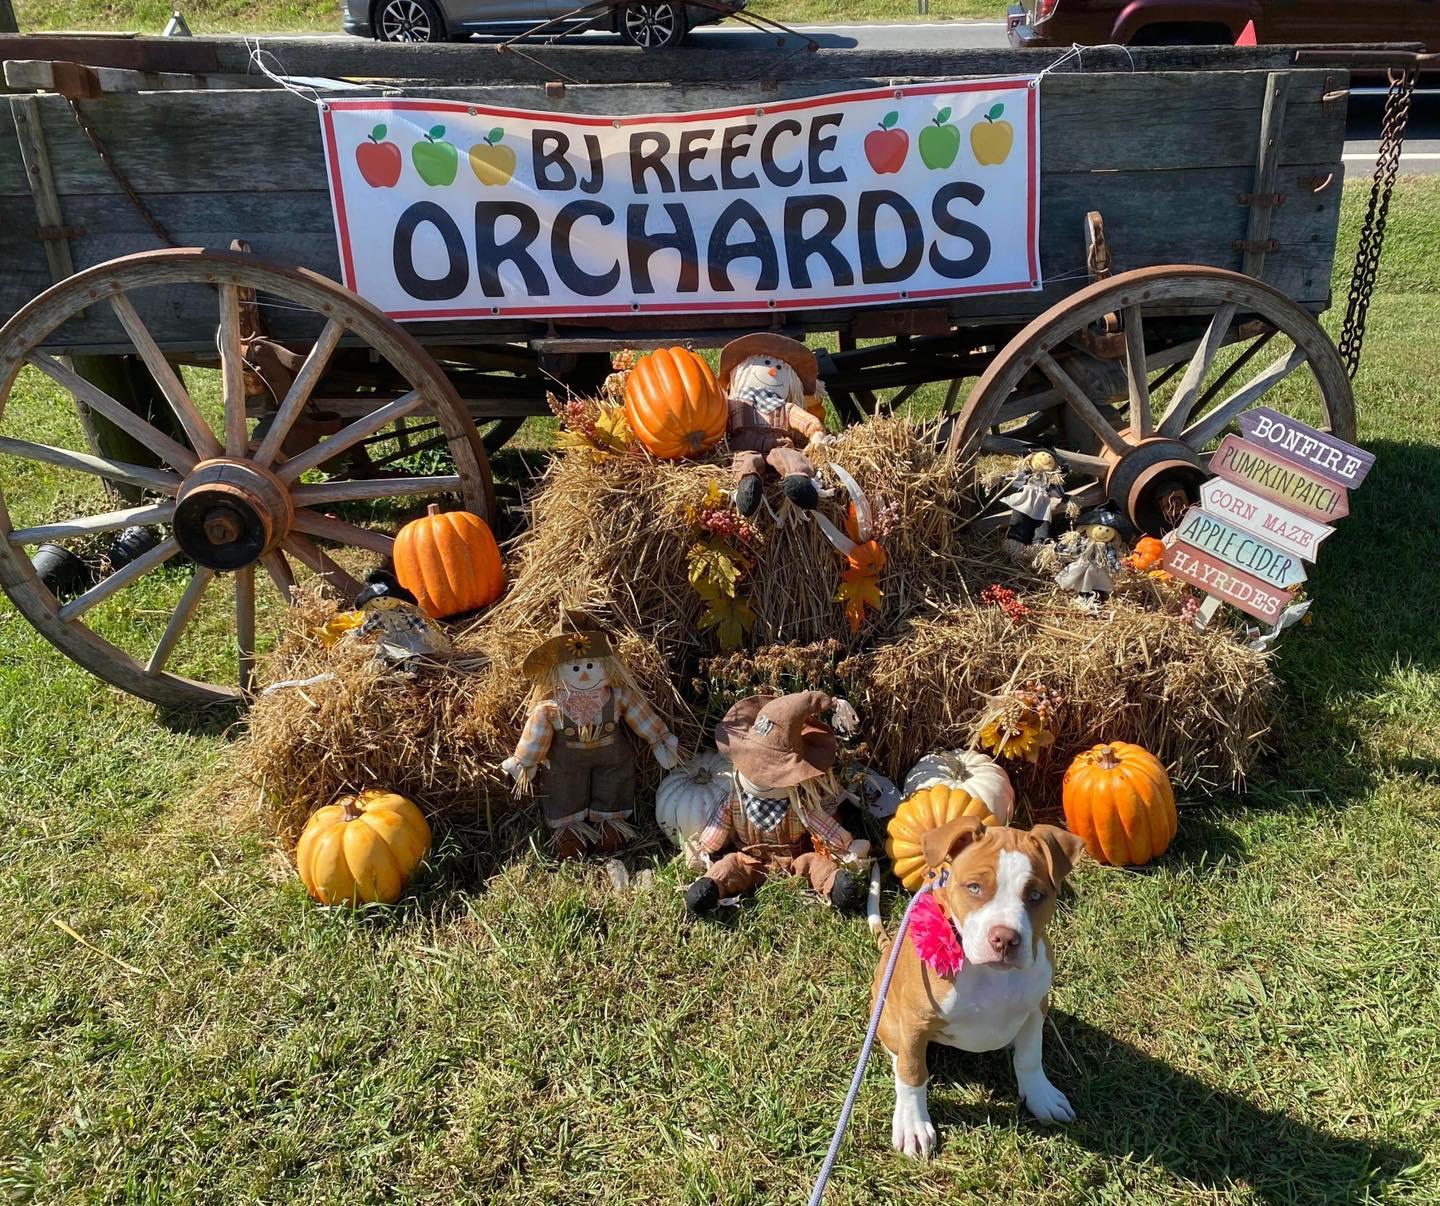 Pet Friendly B.J. Reece Orchards